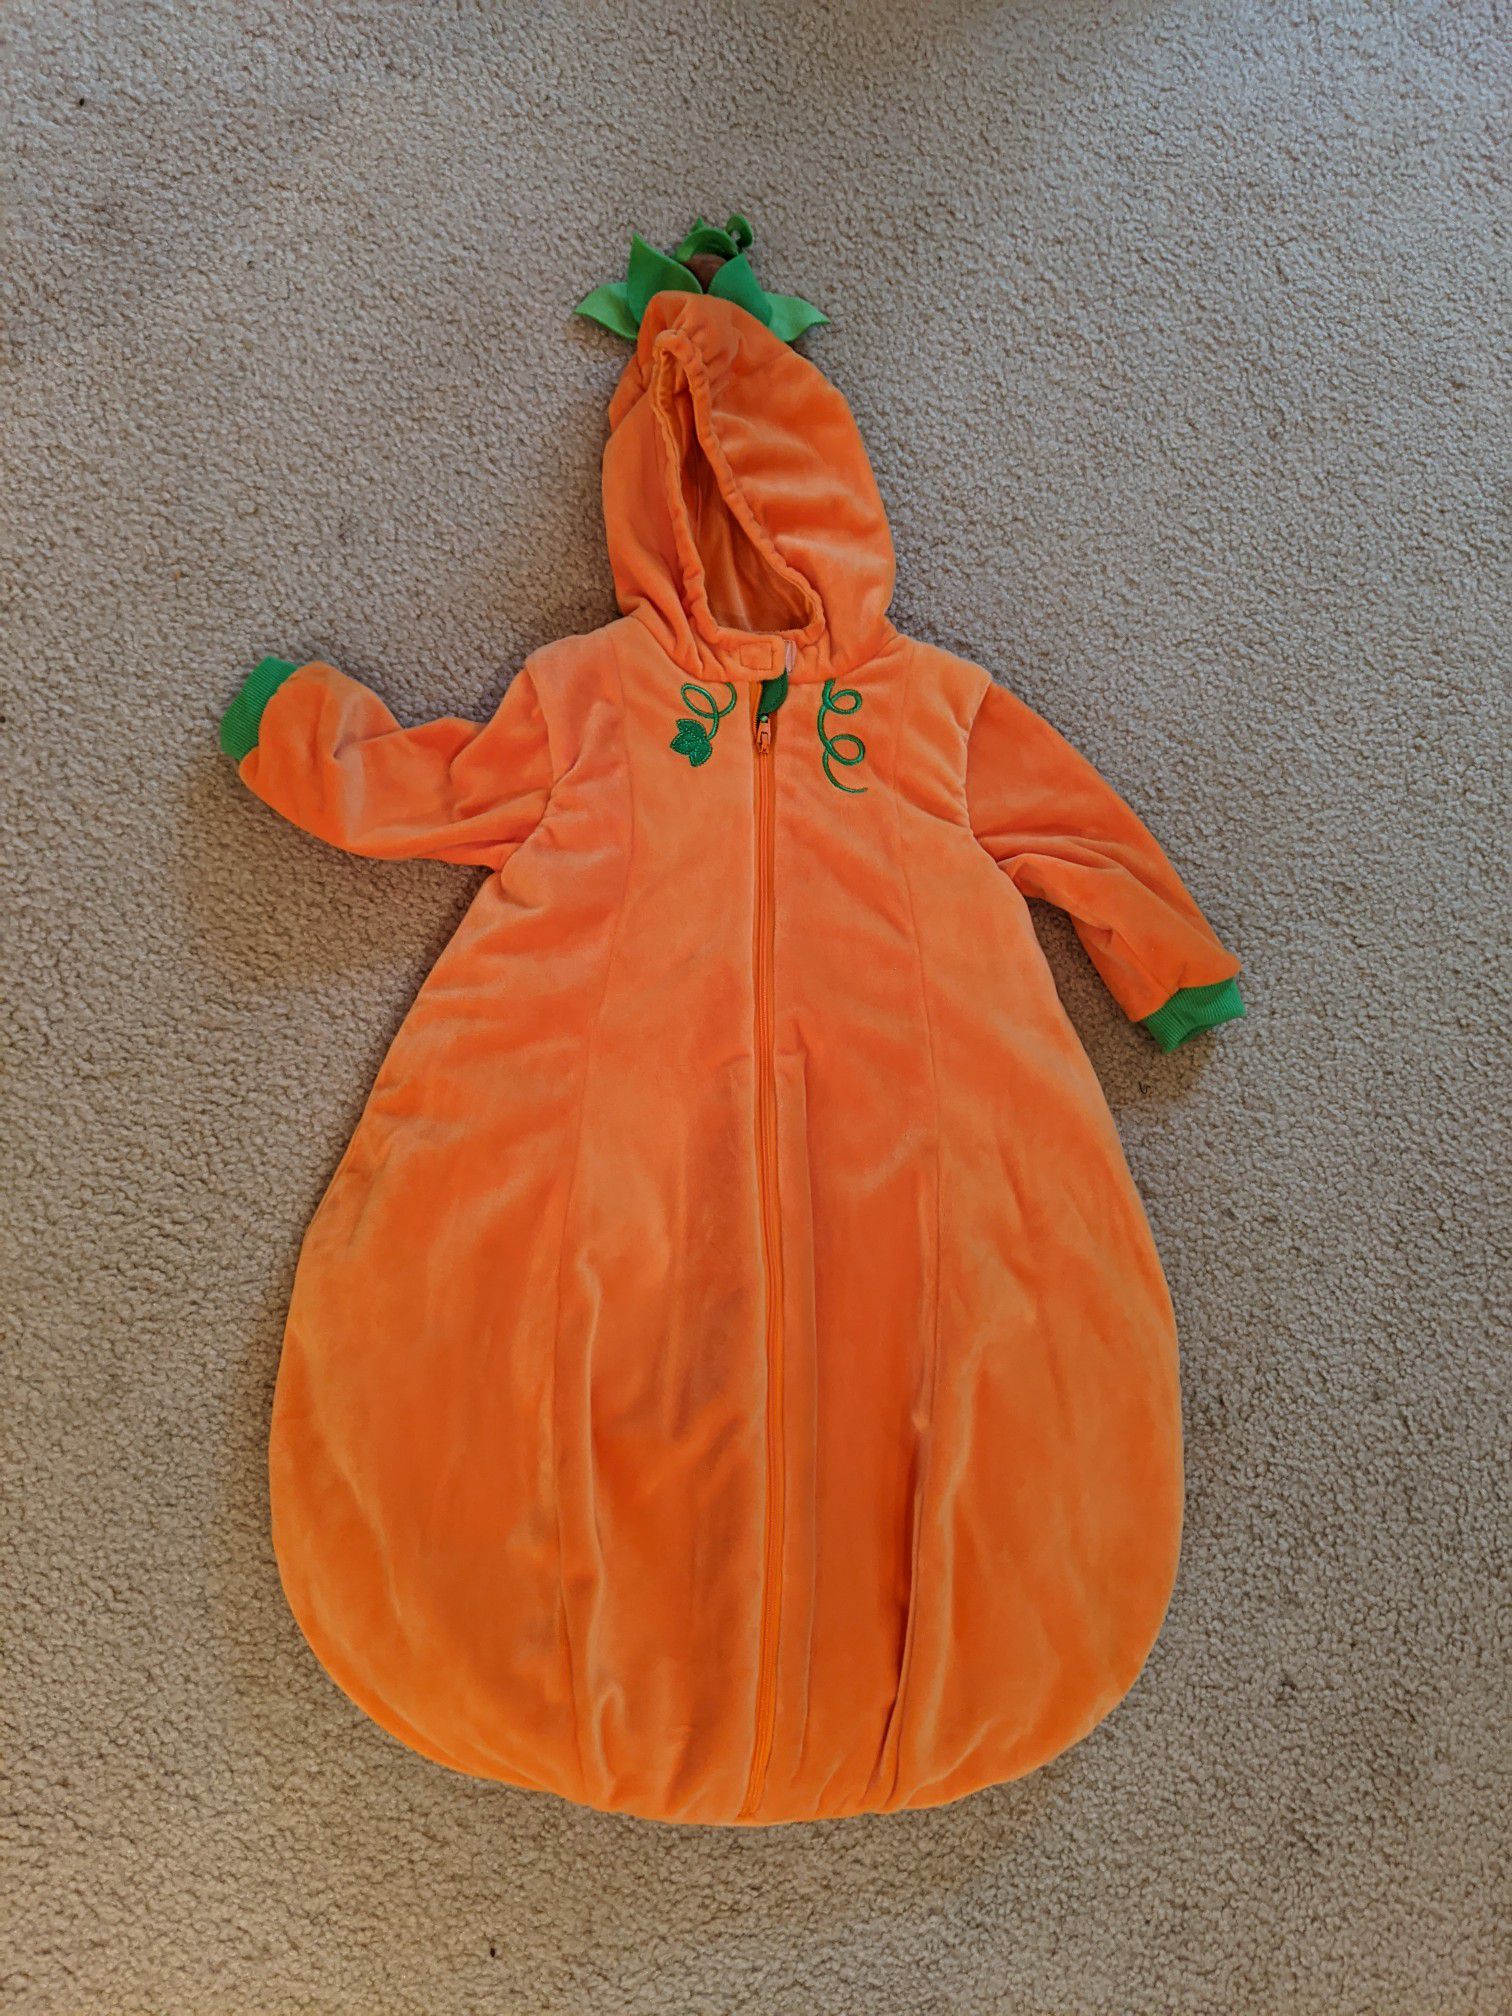 0-6 month pumpkin costume